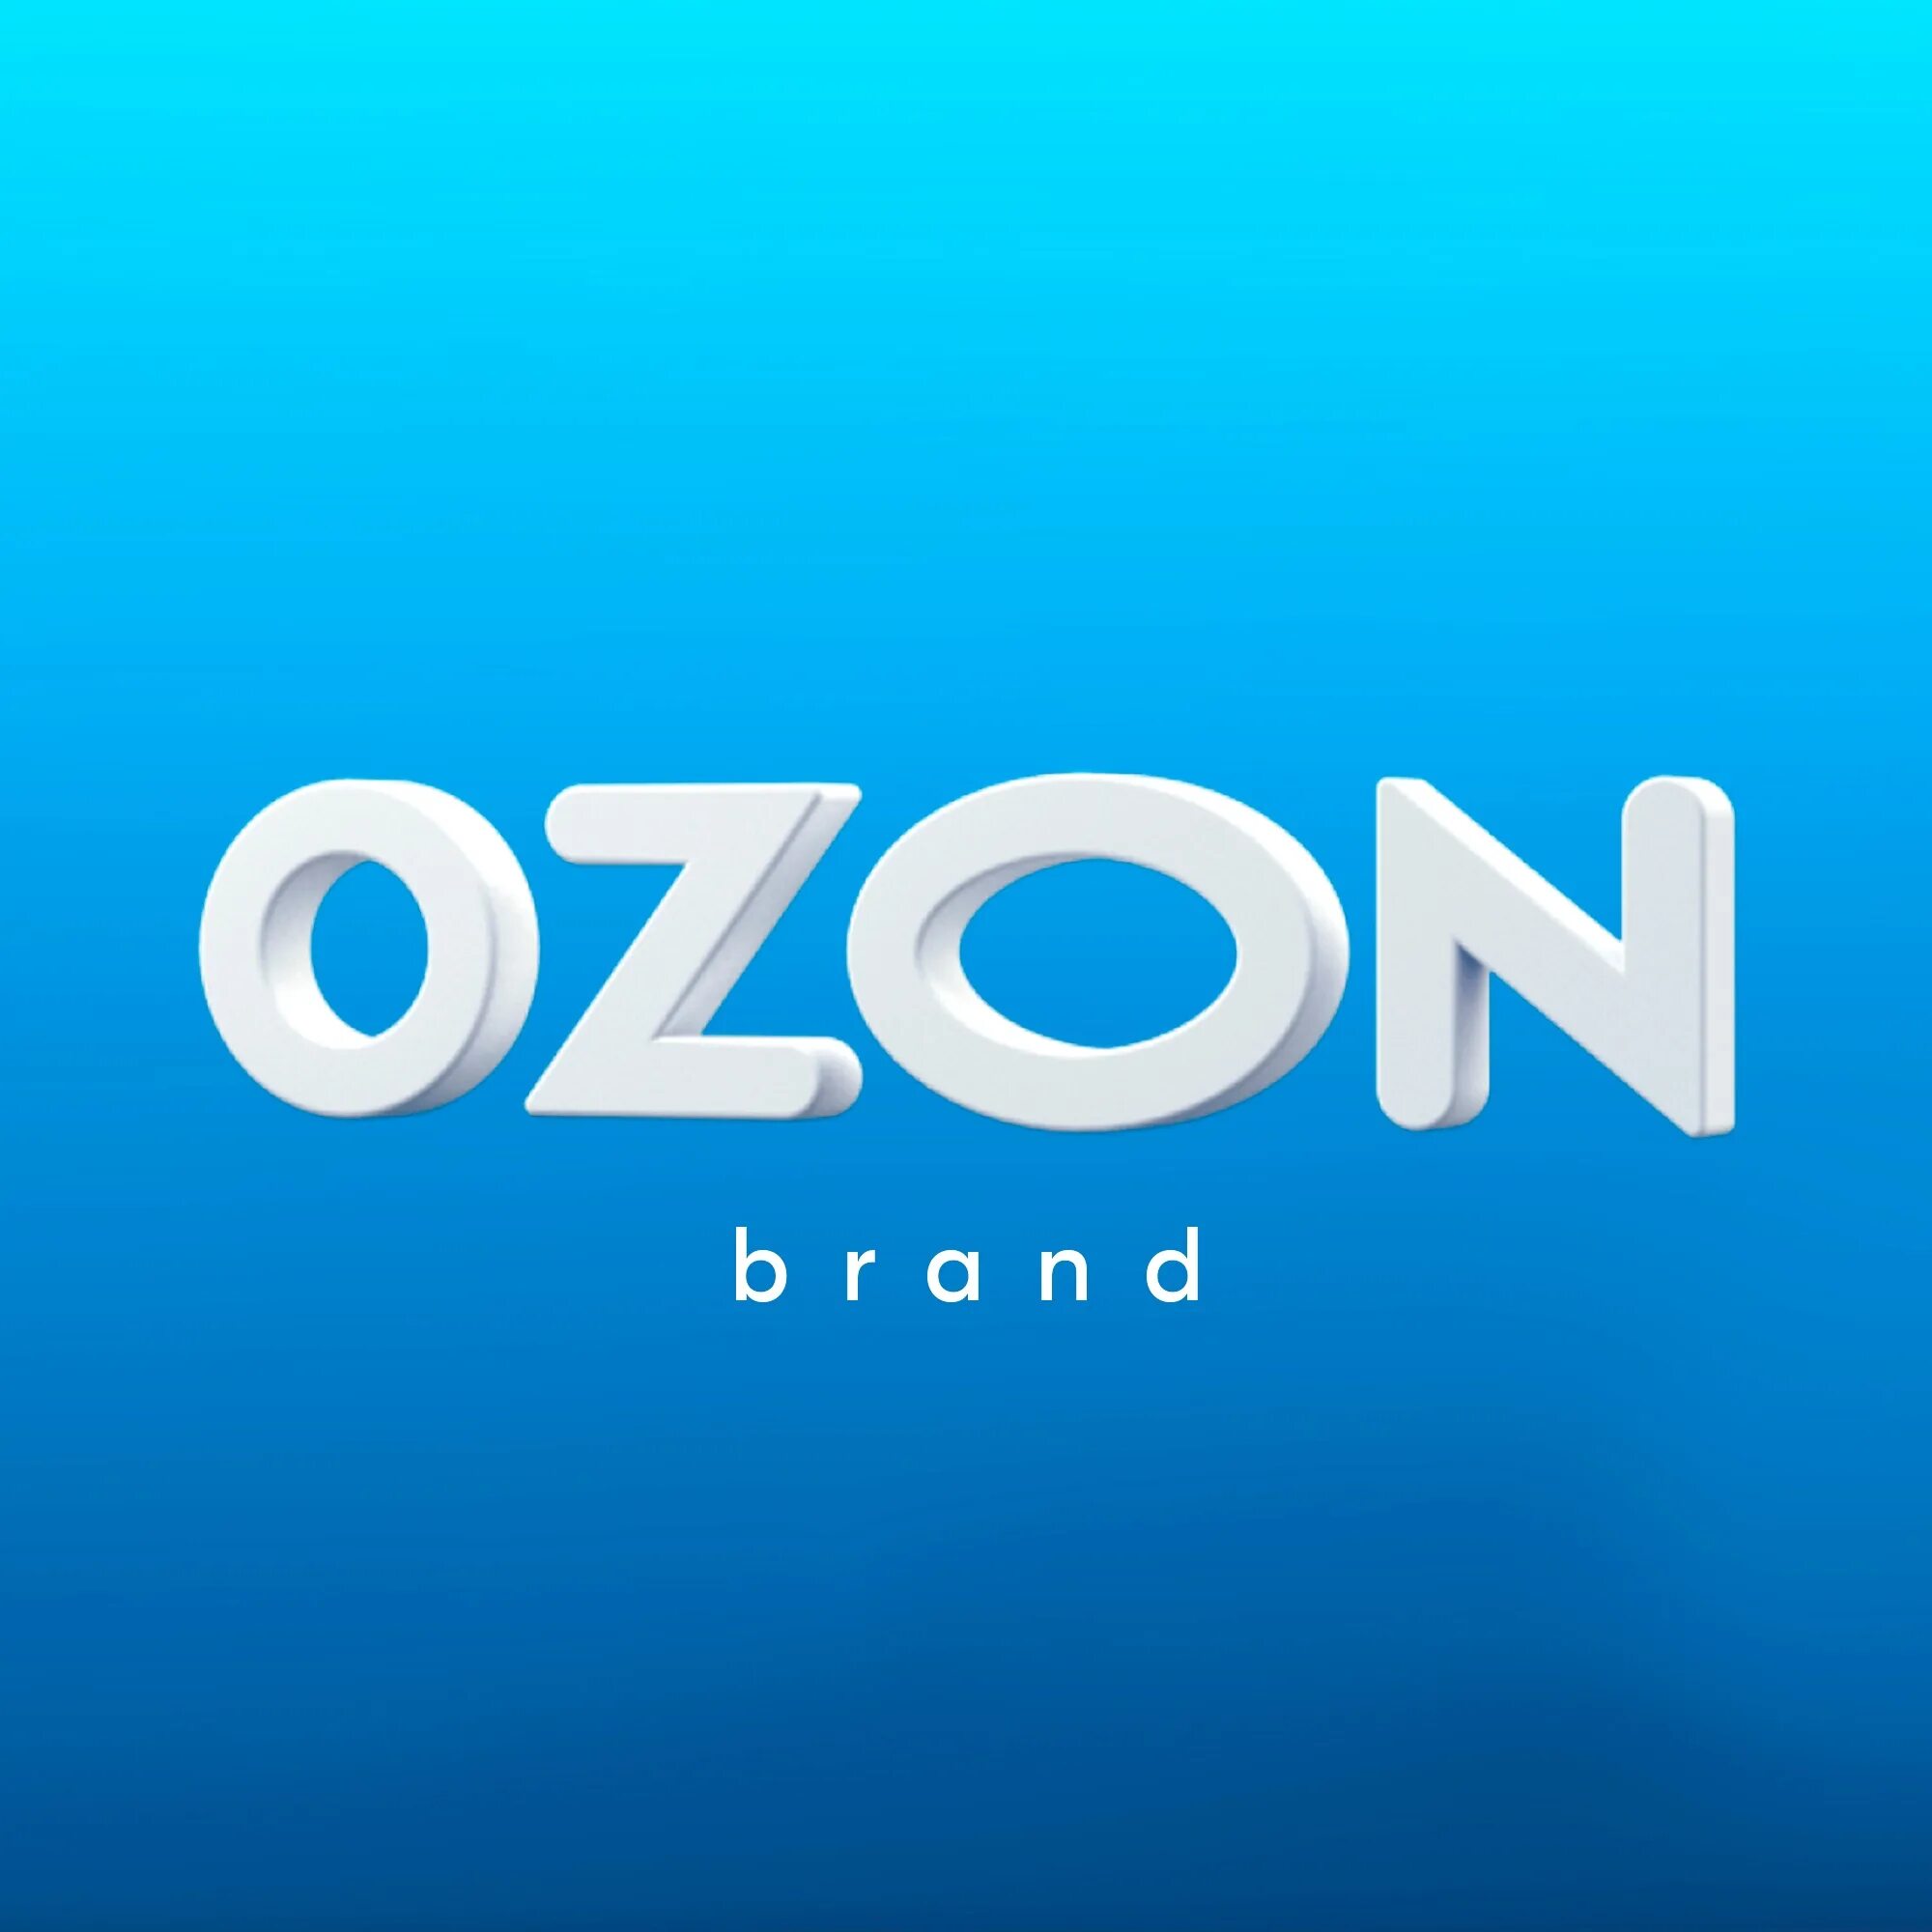 Ozon телеграмм. Озон бренд. OZON Branding. Озон бренд стиль. Новый Брендинг Озон.